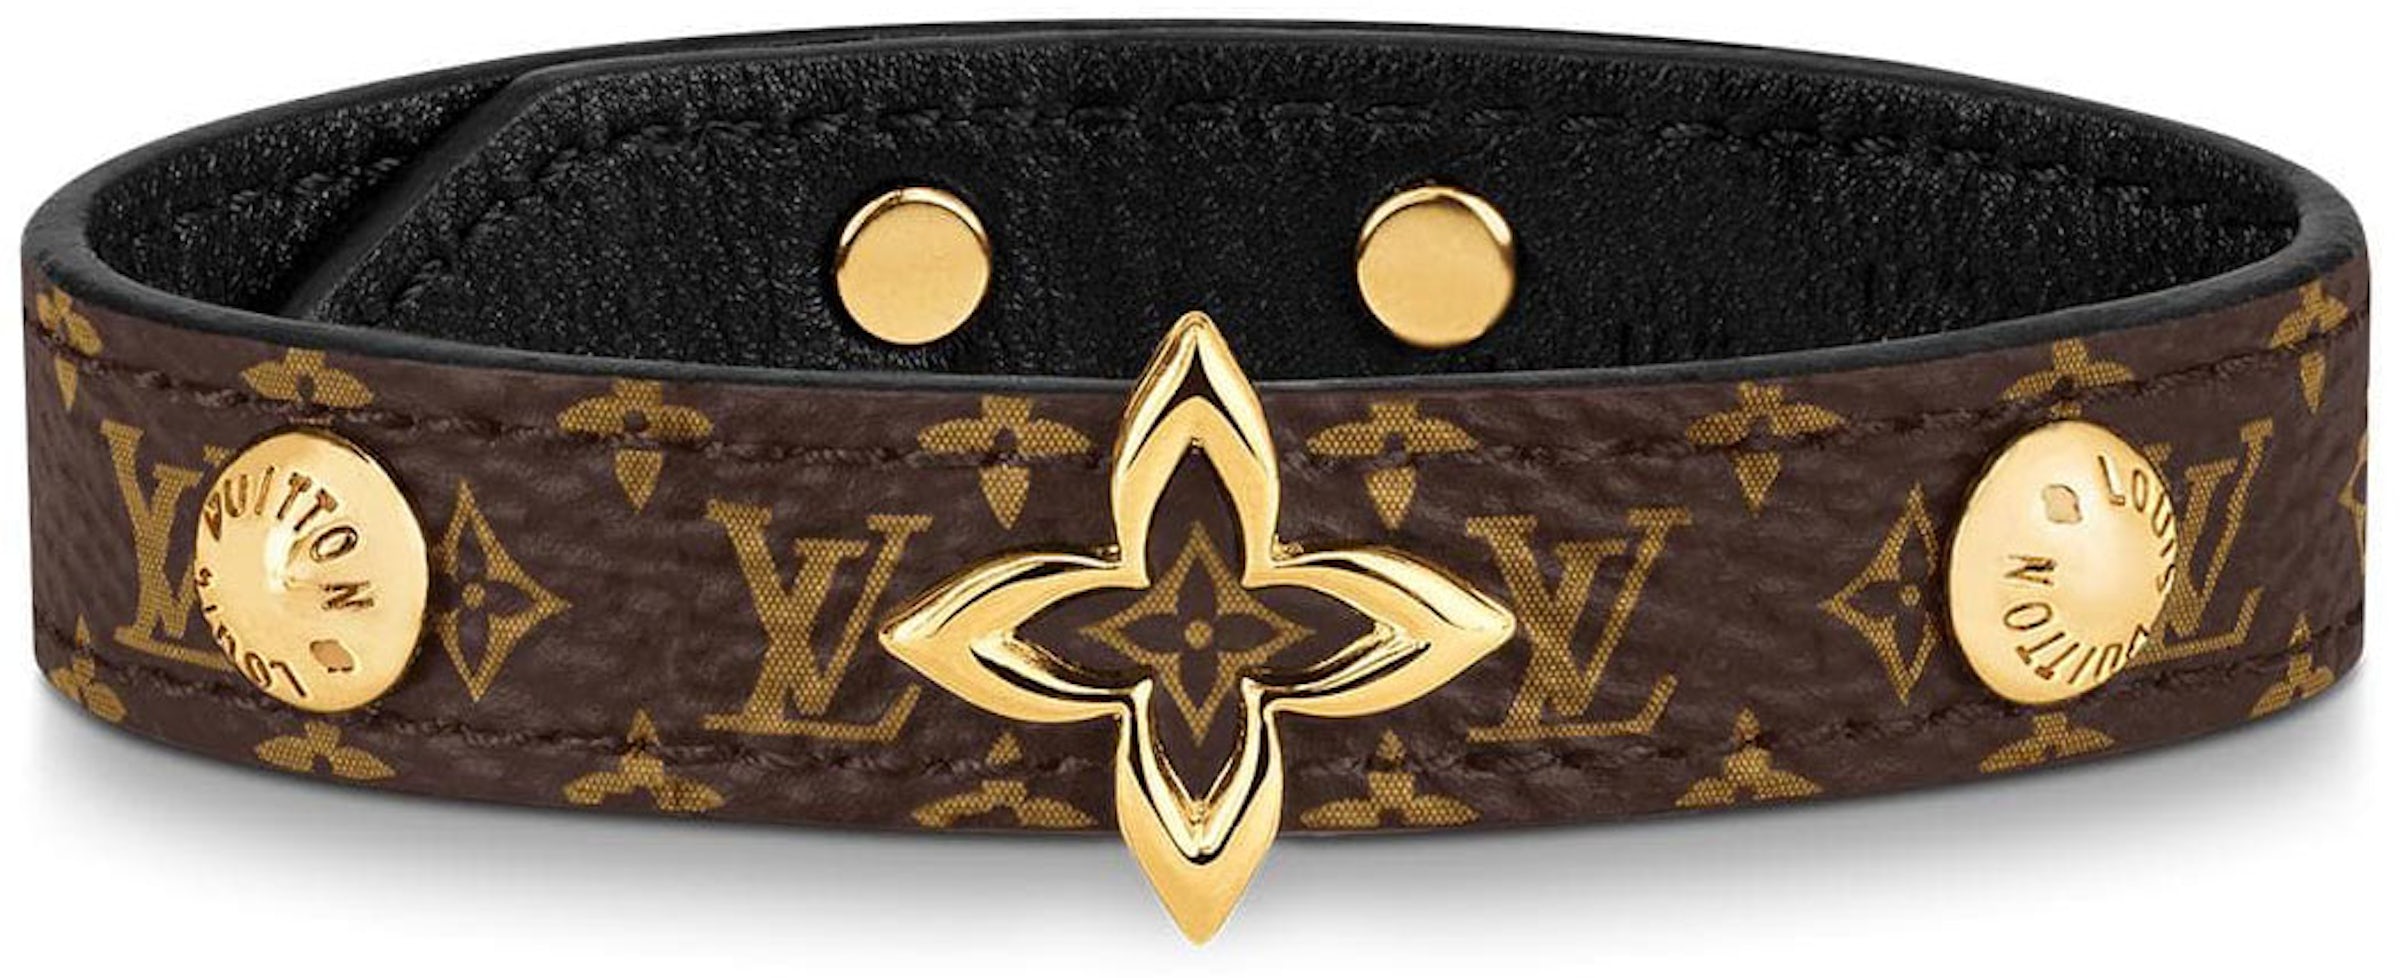 Keep It Double Leather Bracelet Monogram Eclipse Canvas - Men - Fashion  Jewelry